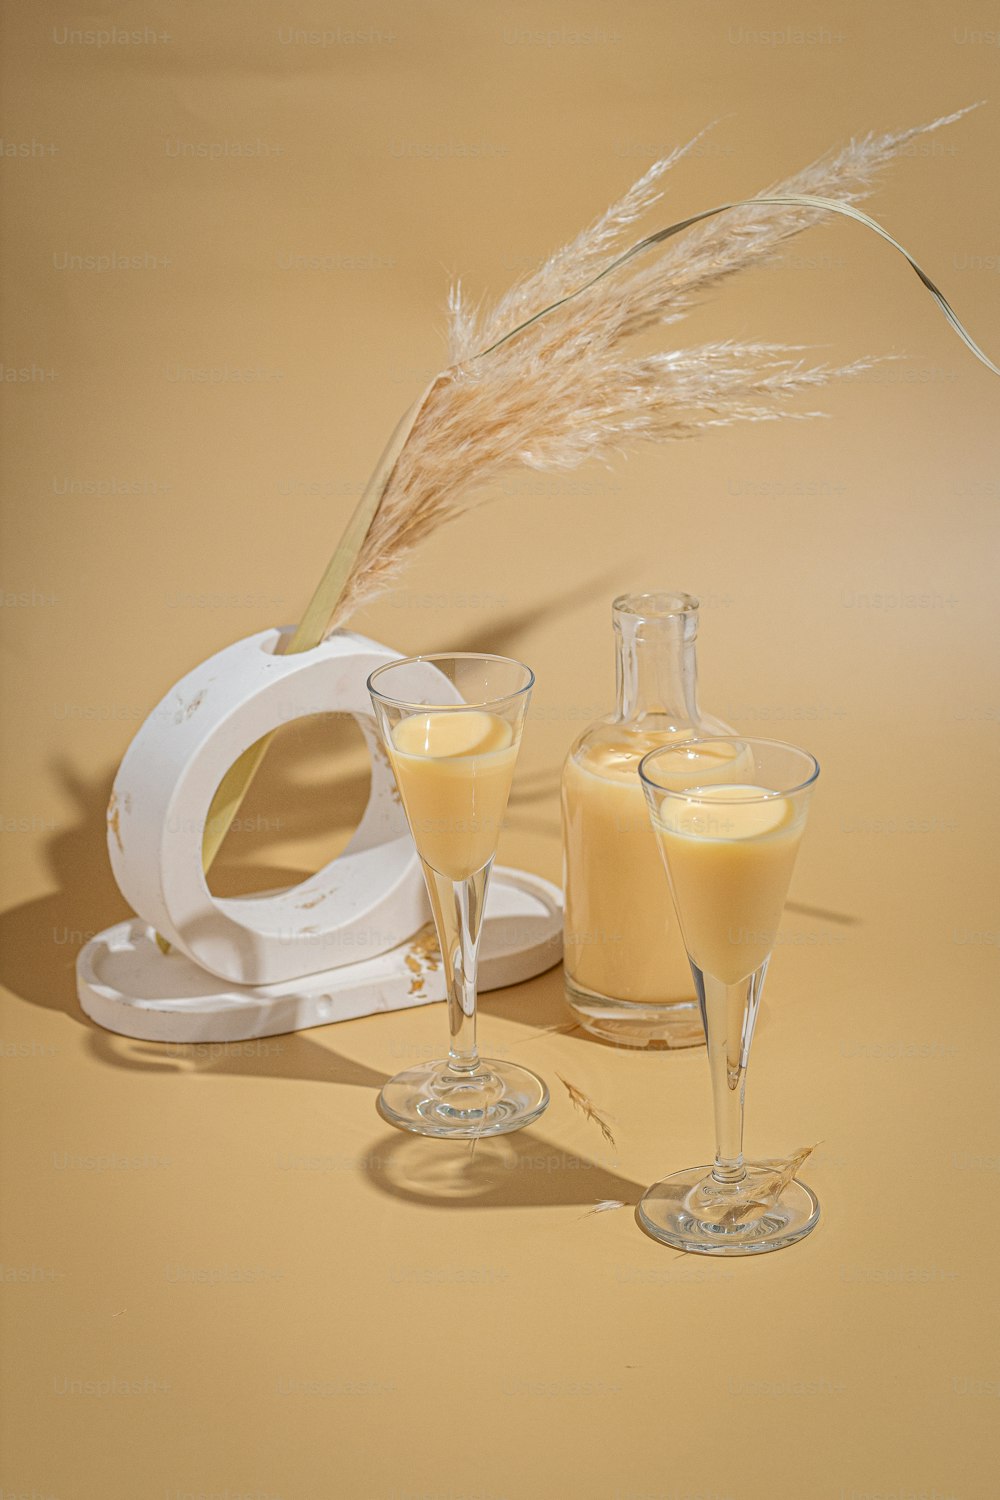 a glass of orange juice next to two glasses of orange juice